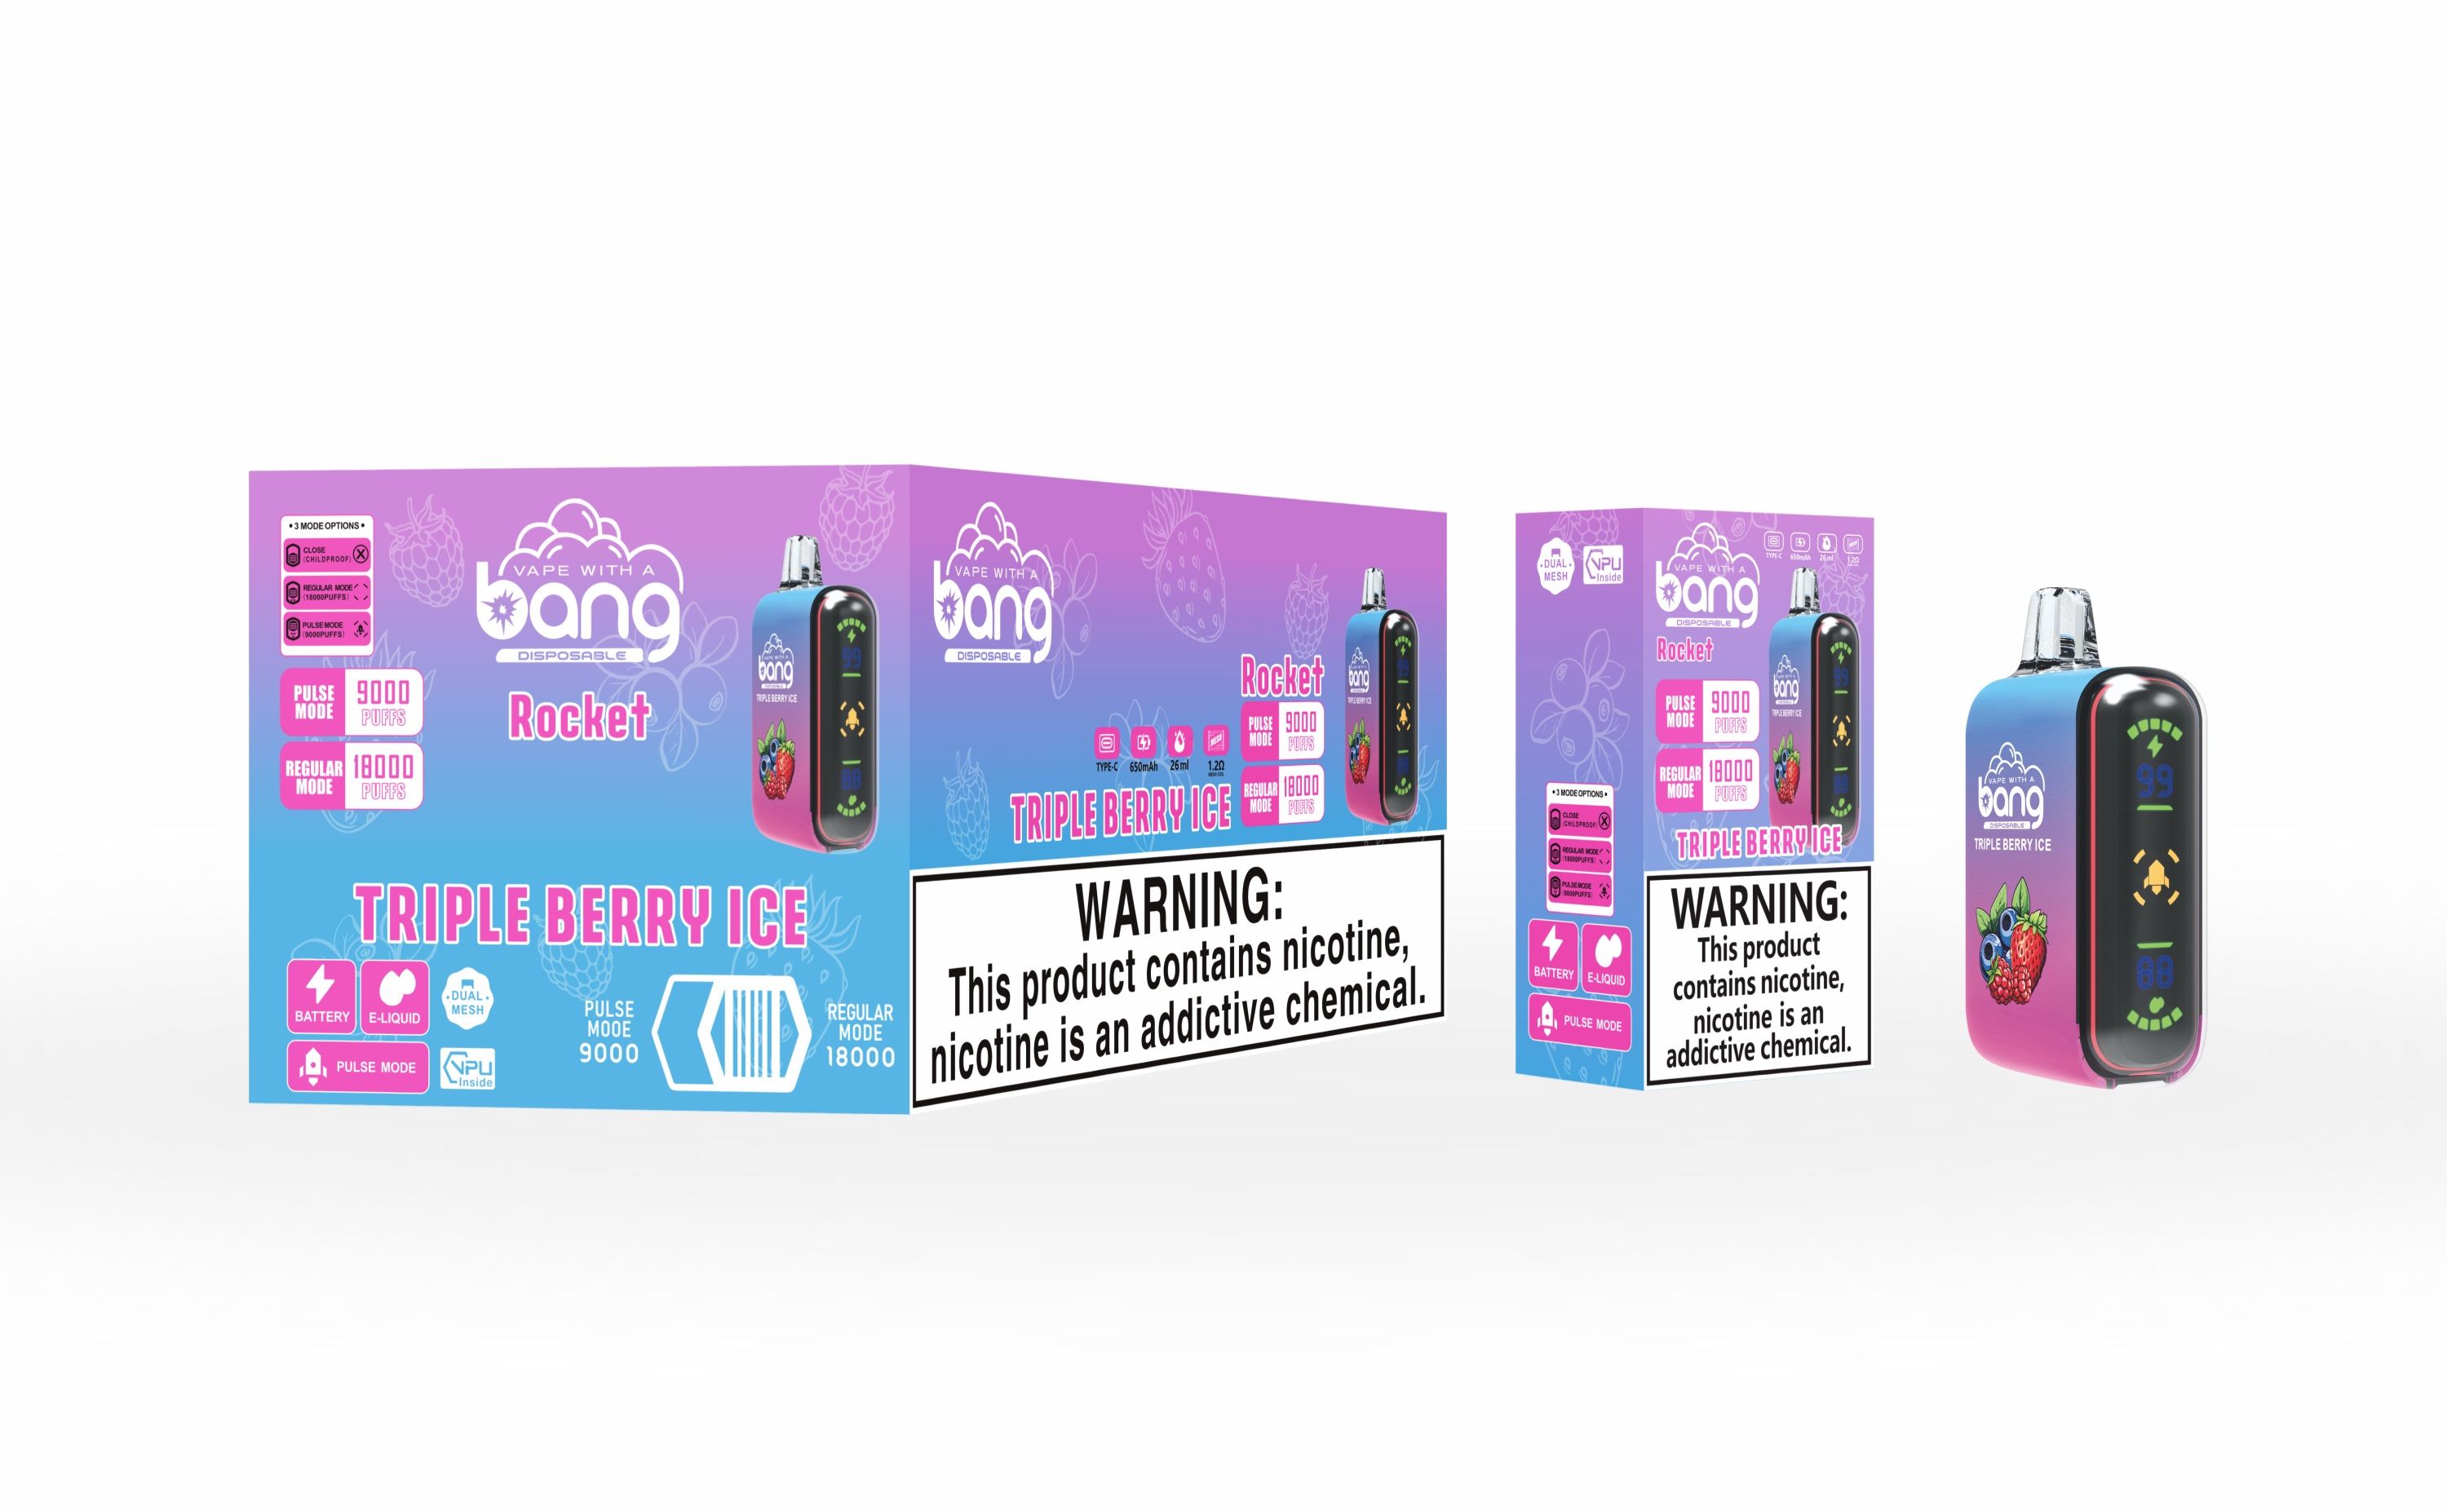 Originele BANG ROCKET 18000 PLUK Wegwerp VAPE Box Kit Dual Mode Puffs 18K 9K Oplaadbare mesh spiraal E-sigaretten 0% 2% 3% 5% VAPER 12 SMAVOREN BANG KING 9K TOT 18K